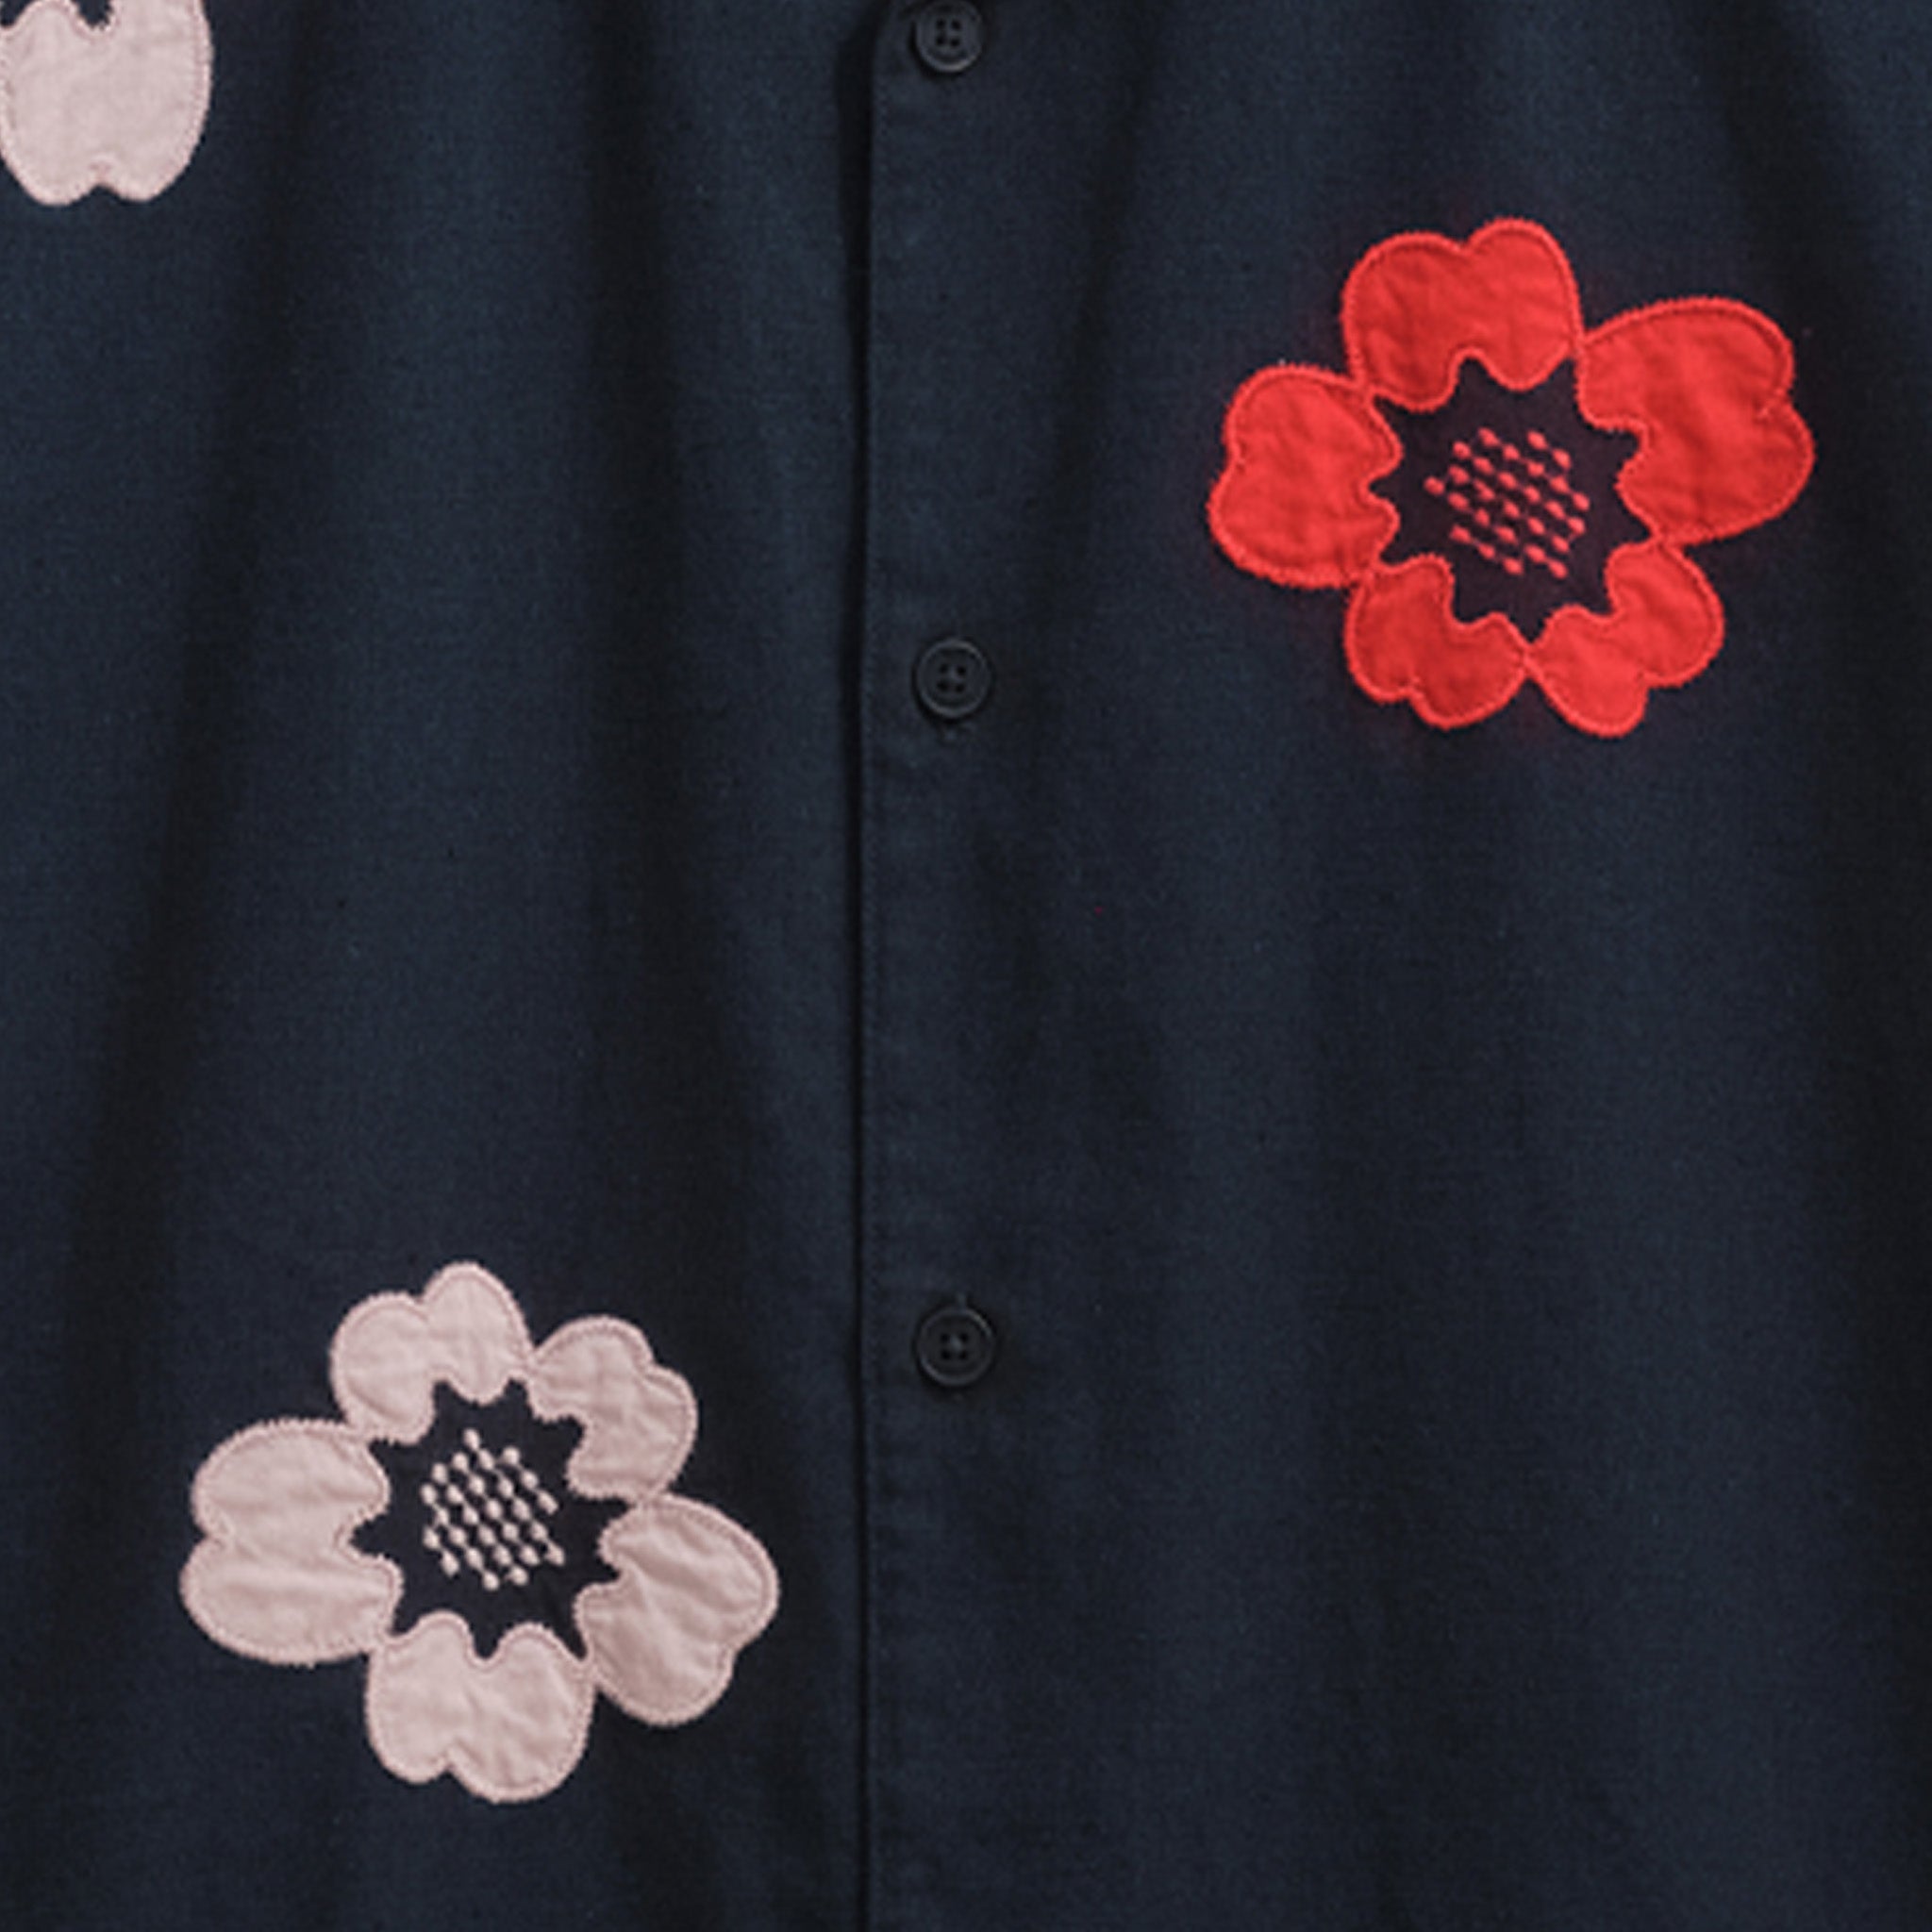 Wax London Didcot Short Sleeve Shirt - Applique Floral (Navy) - August Shop